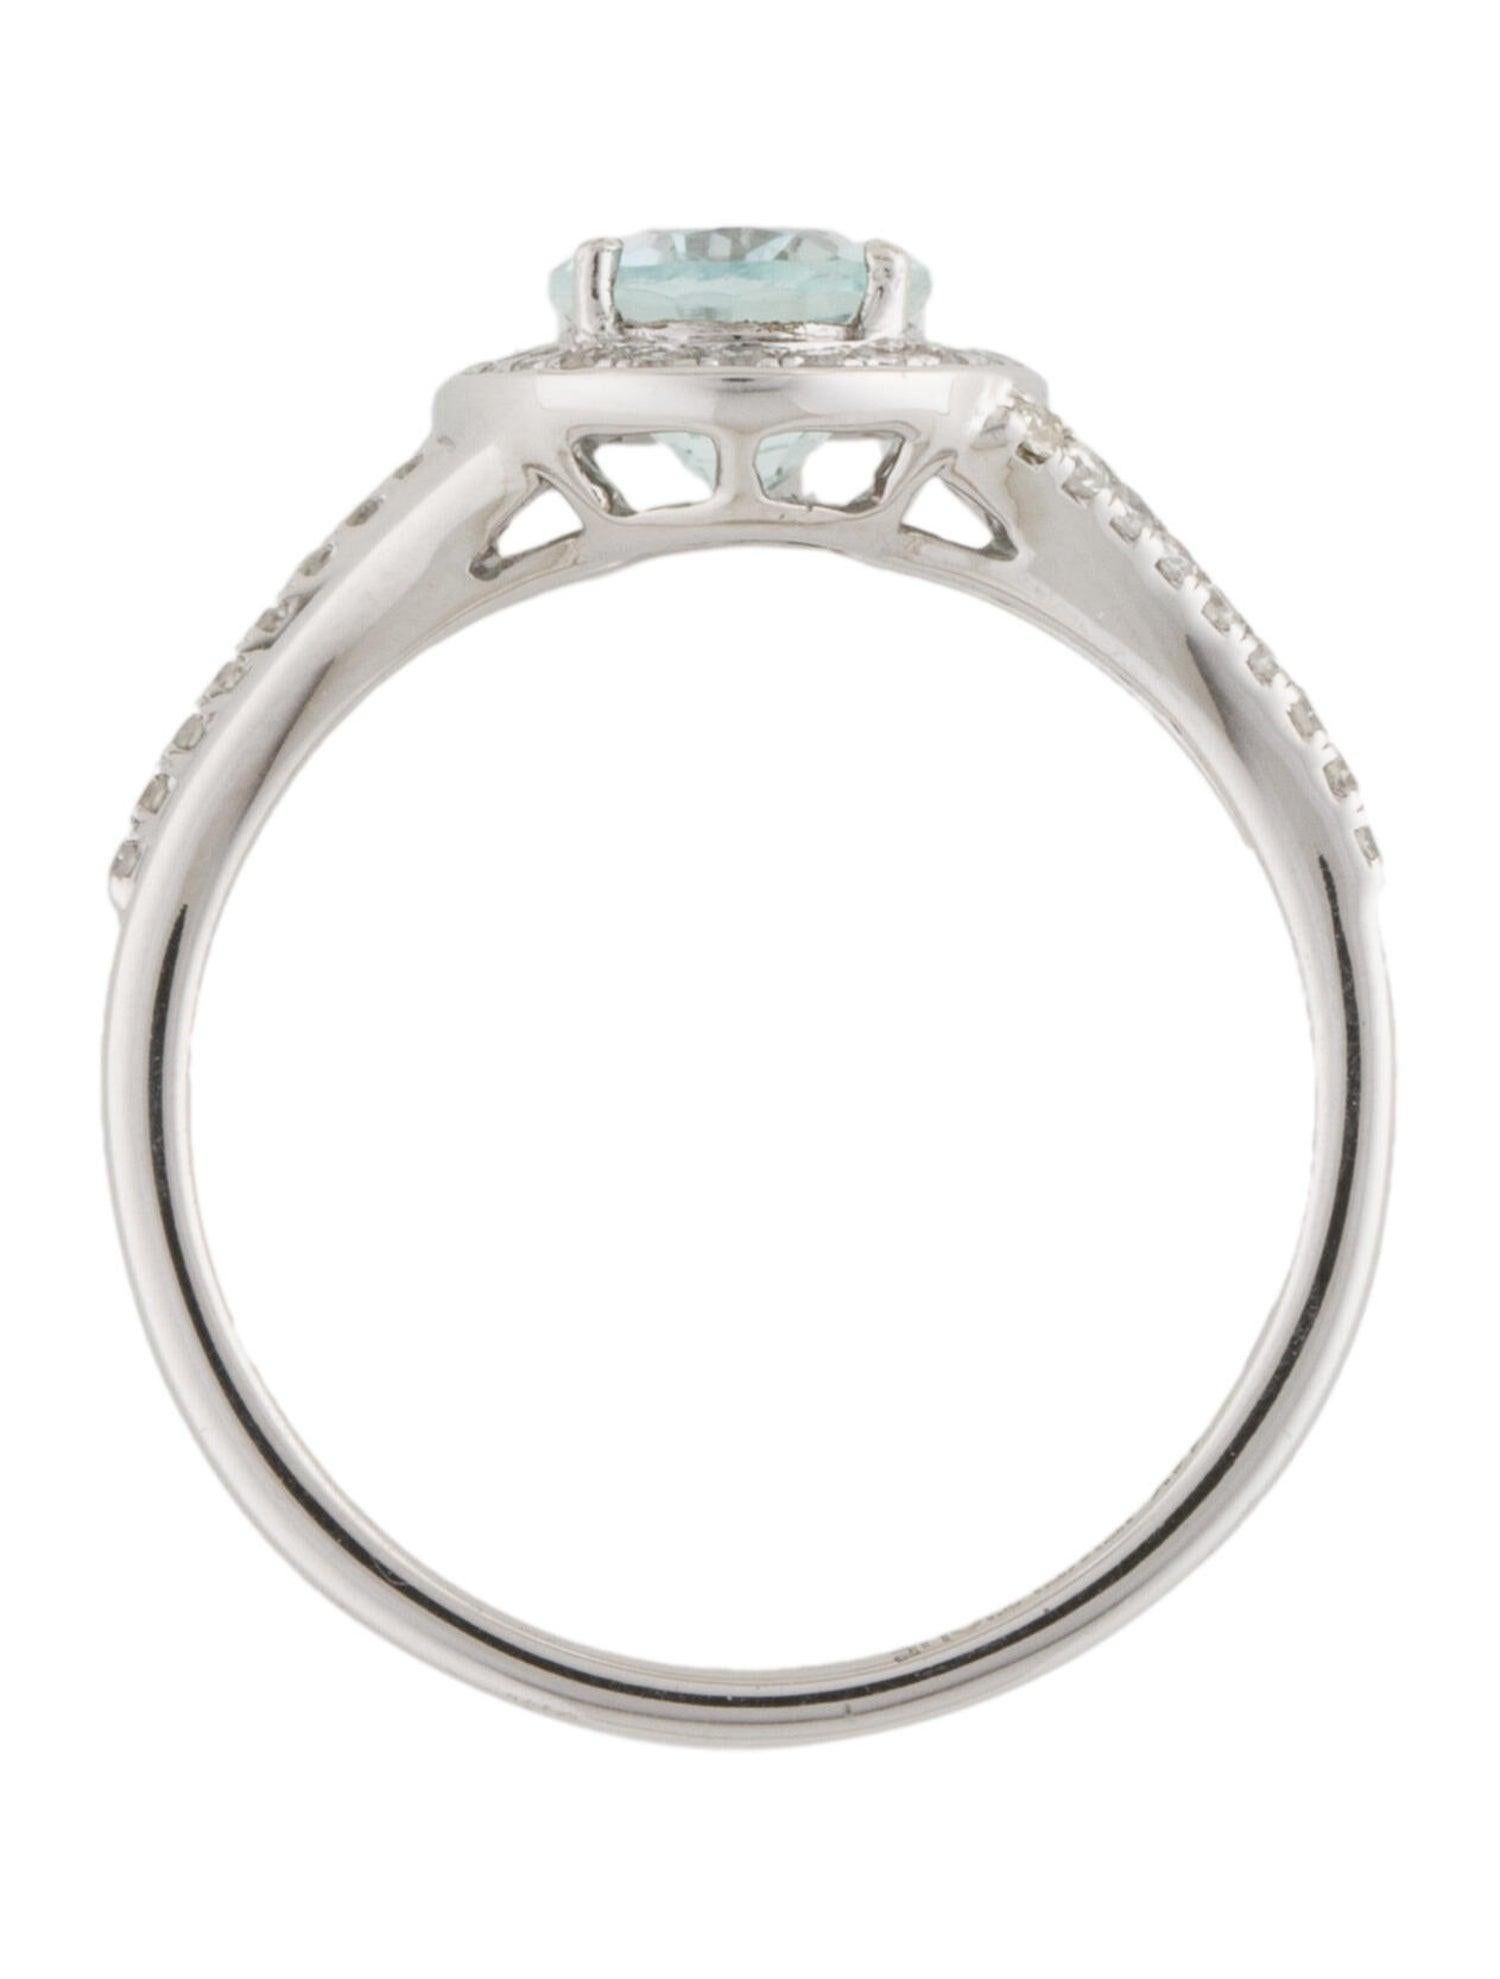 Women's Exquisite 14K Diamond & Aquamarine Cocktail Ring, Size 7 - Timeless & Elegant